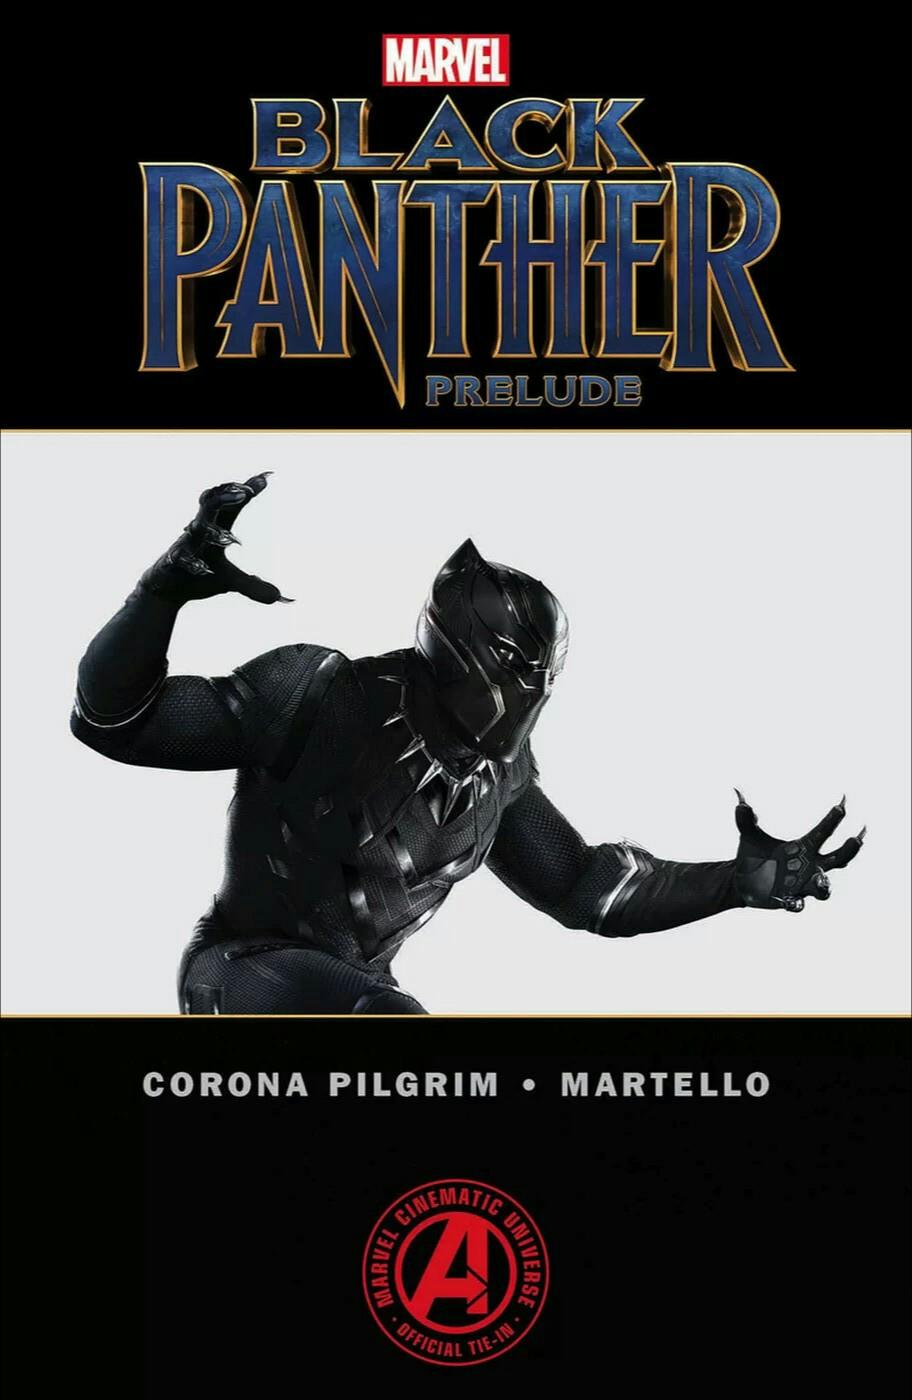 Marvel's Black Panther Prelude Vol. 1 #2